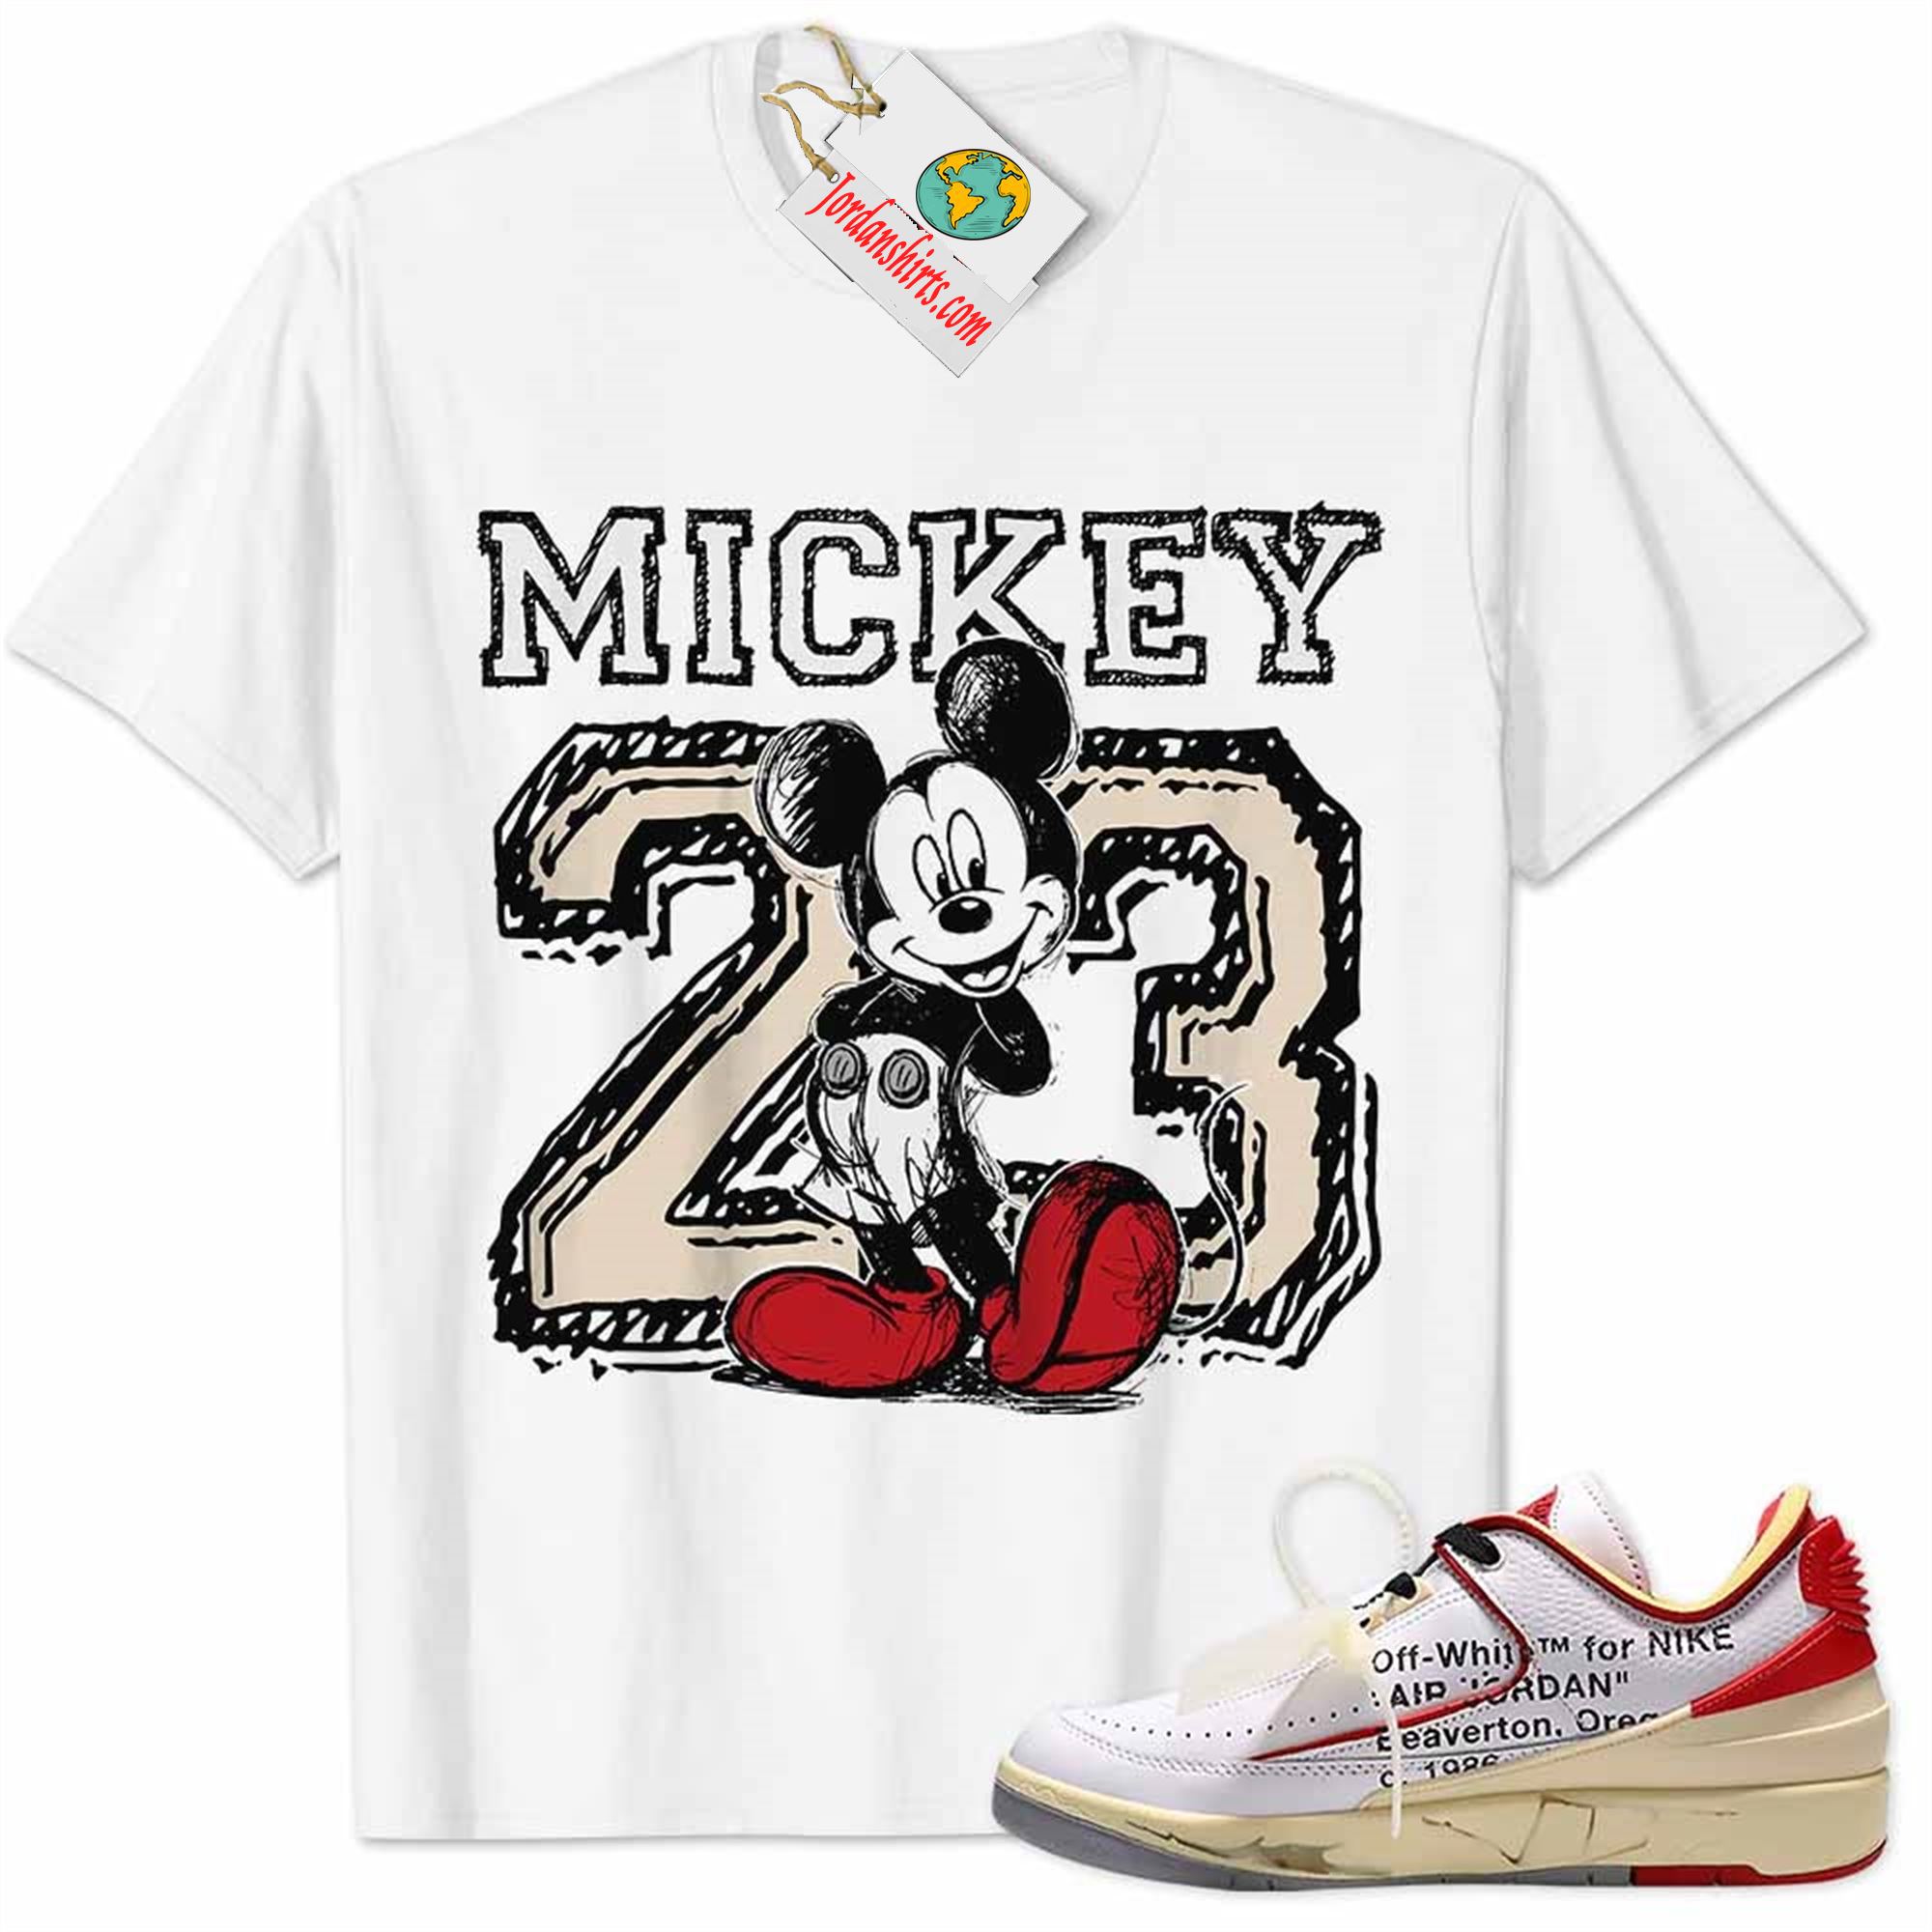 Jordan 2 Shirt, Low White Red Off-white 2s Shirt Mickey 23 Michael Jordan Number Draw White Full Size Up To 5xl